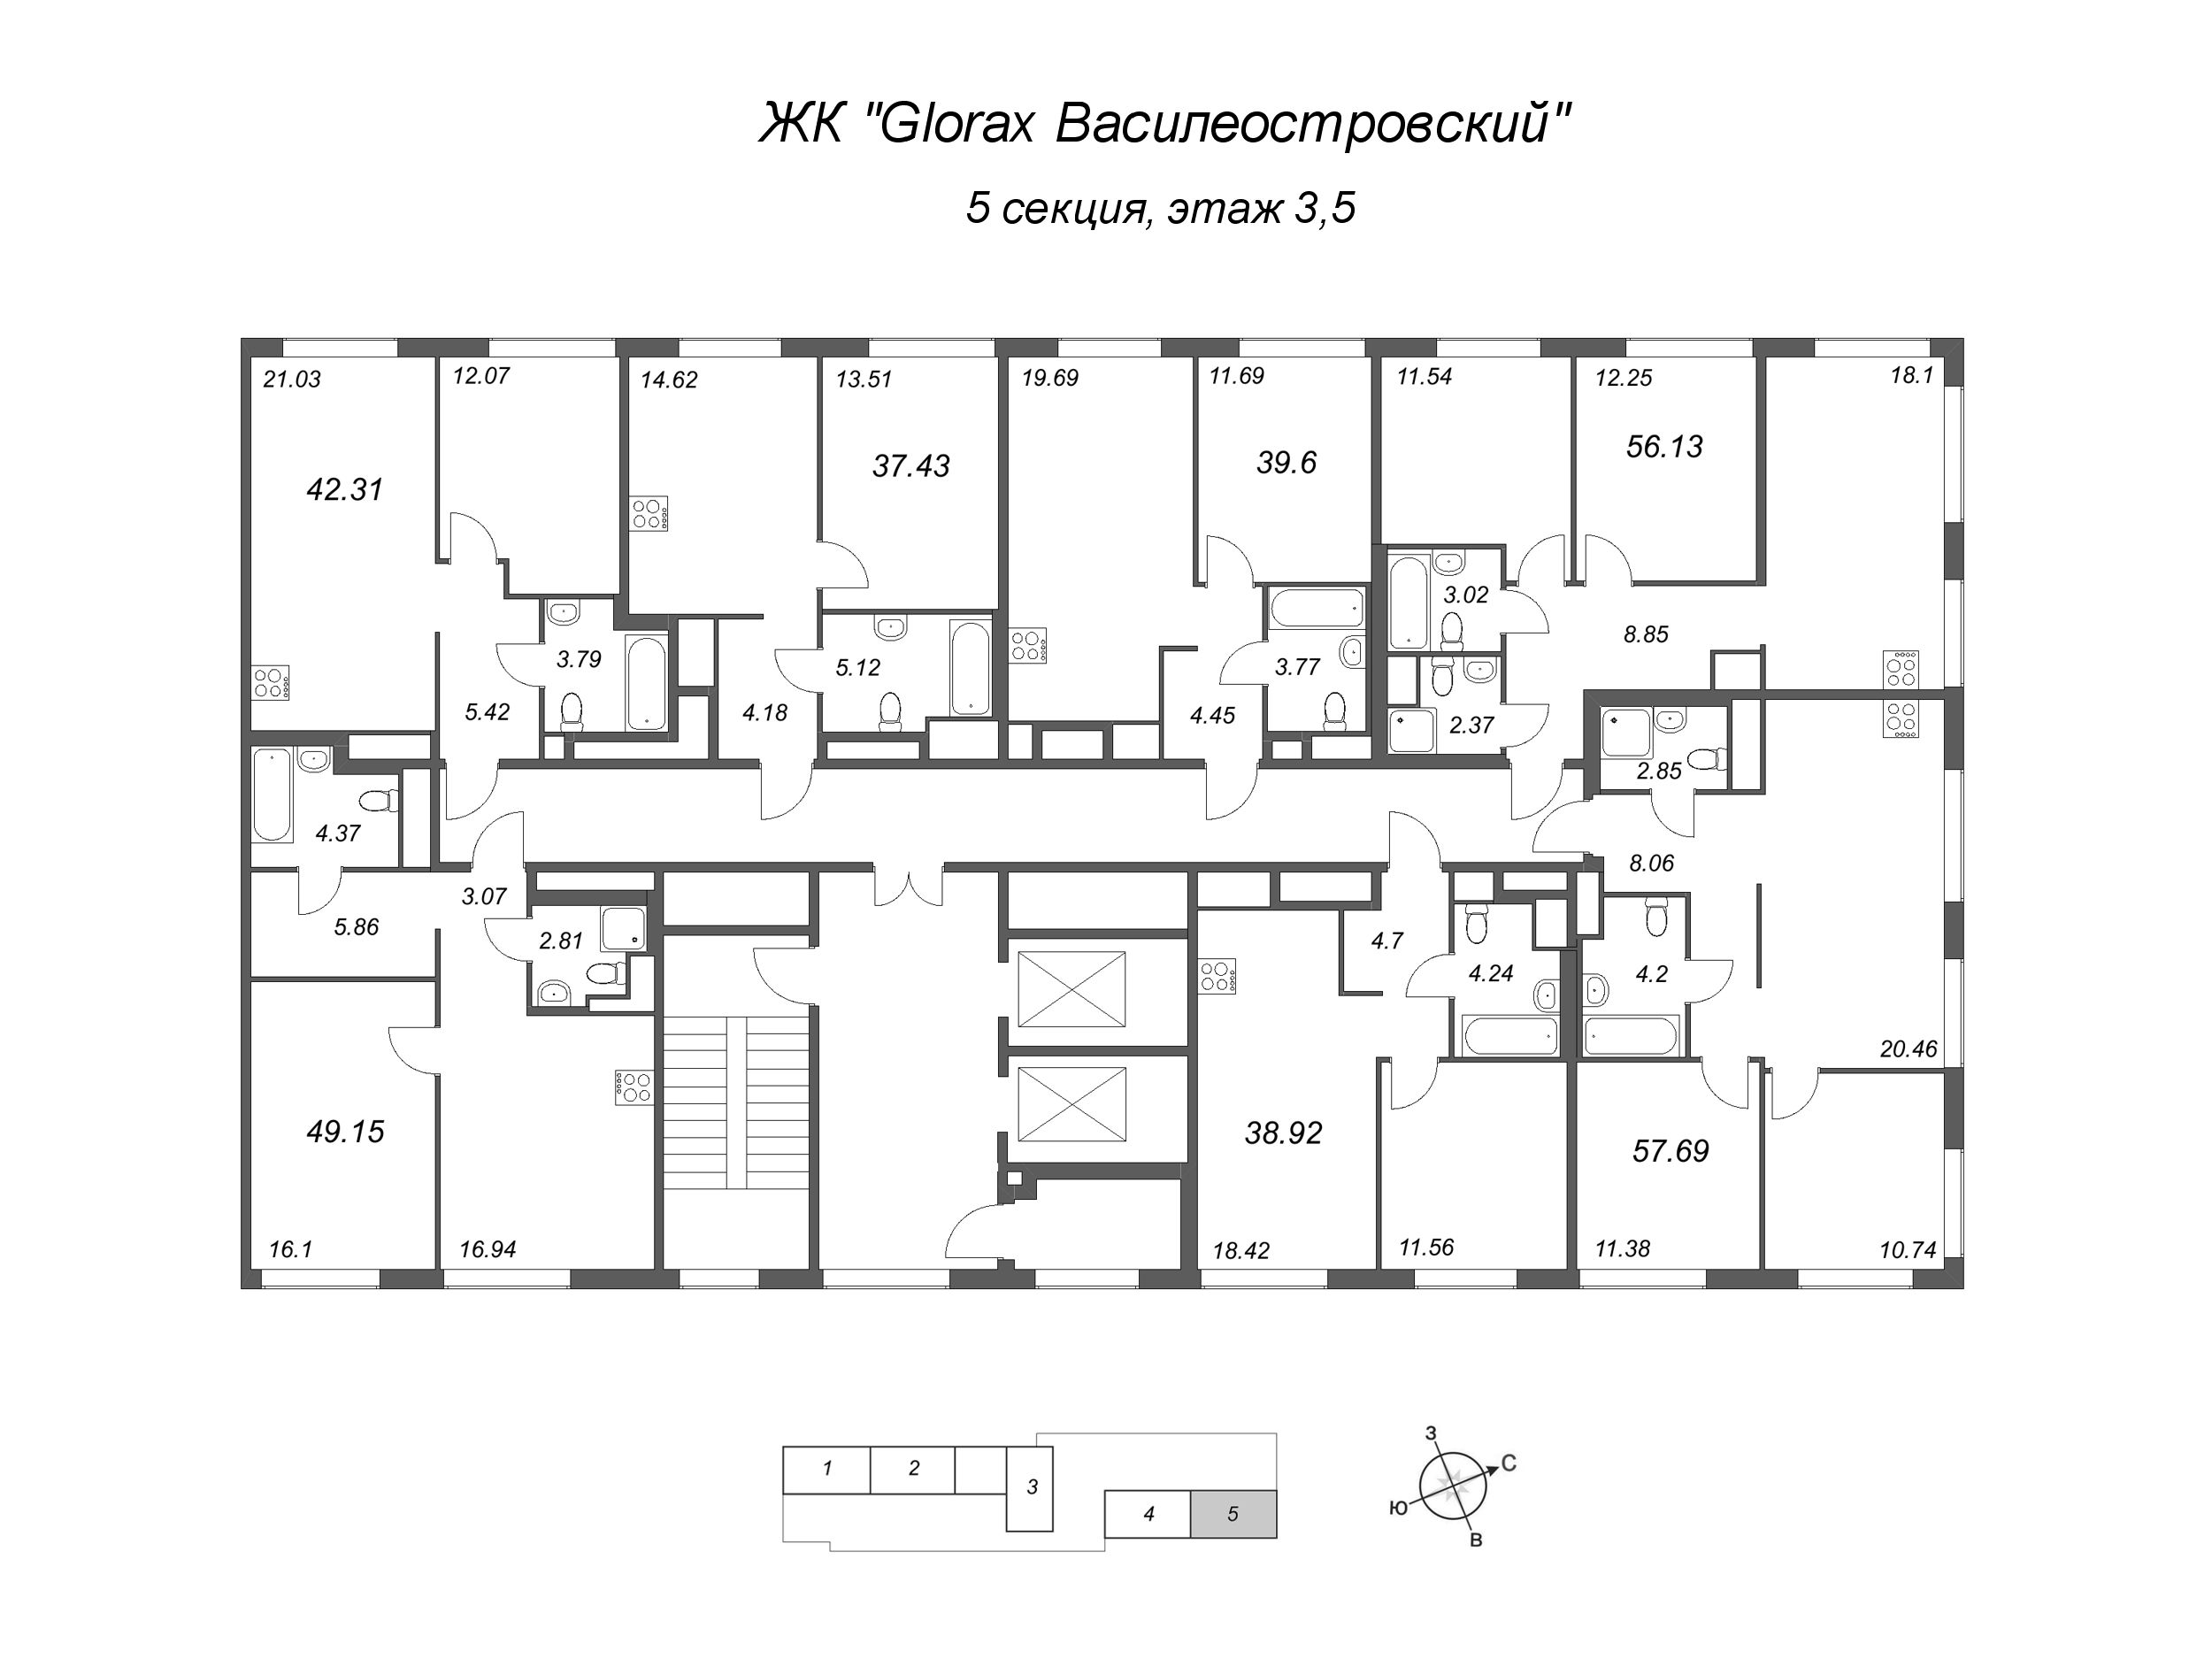 2-комнатная (Евро) квартира, 49.15 м² - планировка этажа